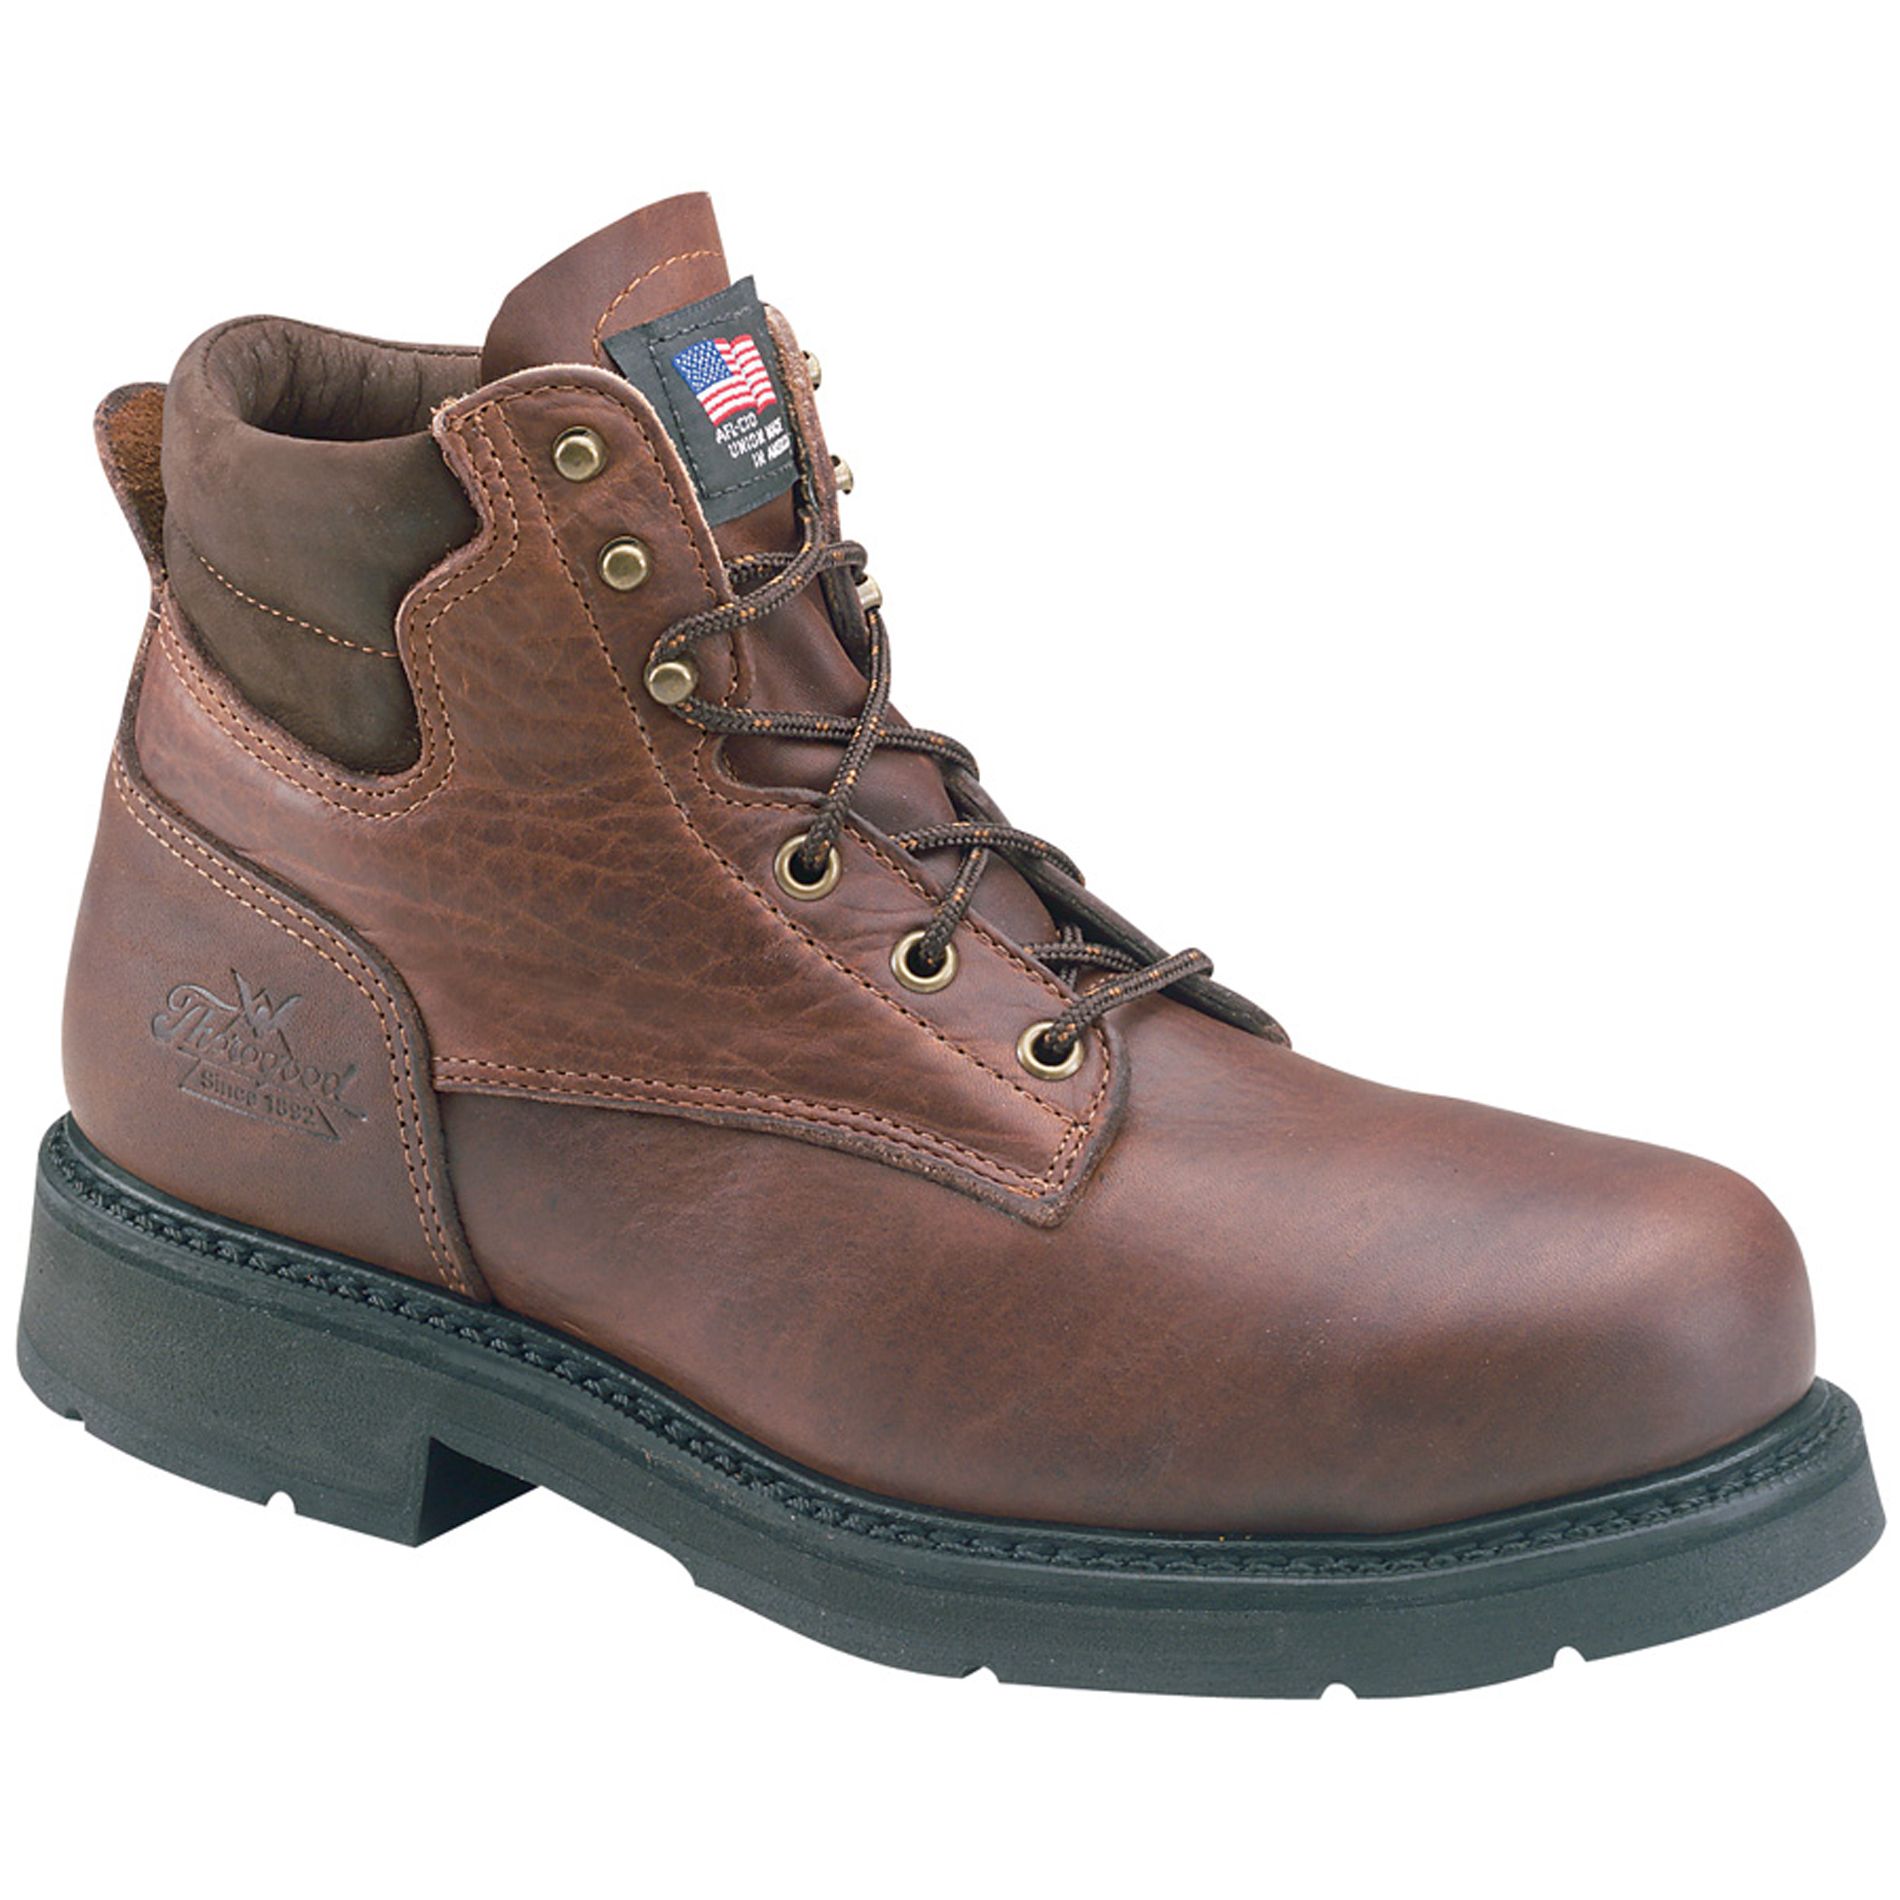 Thorogood Men's American Heritage Steel Toe 6" Work Boot 804-4203 Wide Width Available - Brown